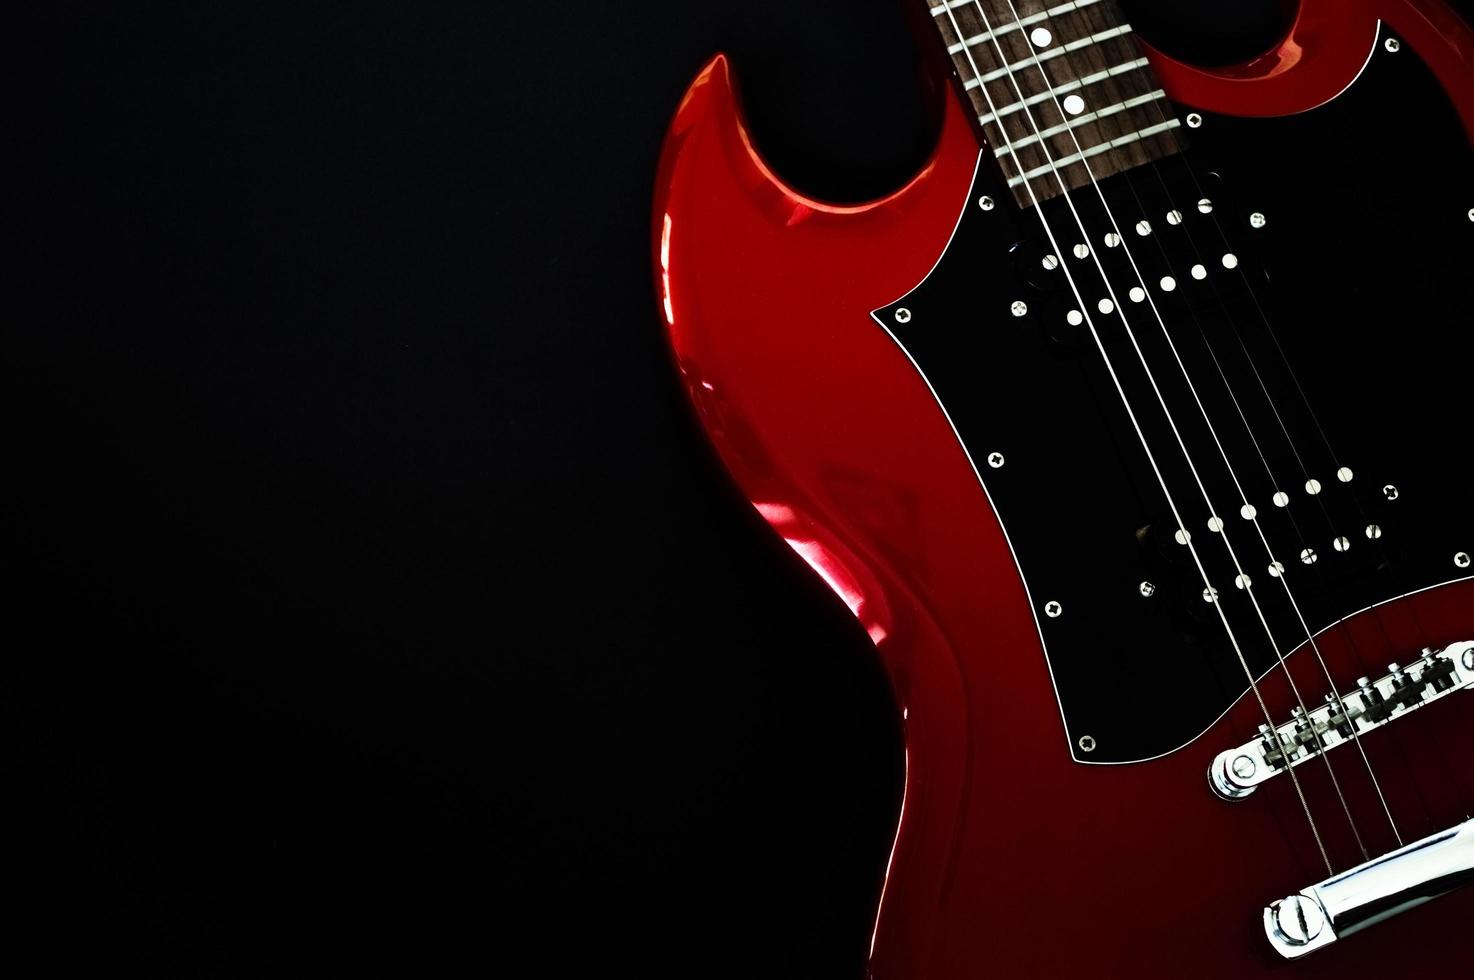 rode elektrische gitaar close-up op zwarte achtergrond foto